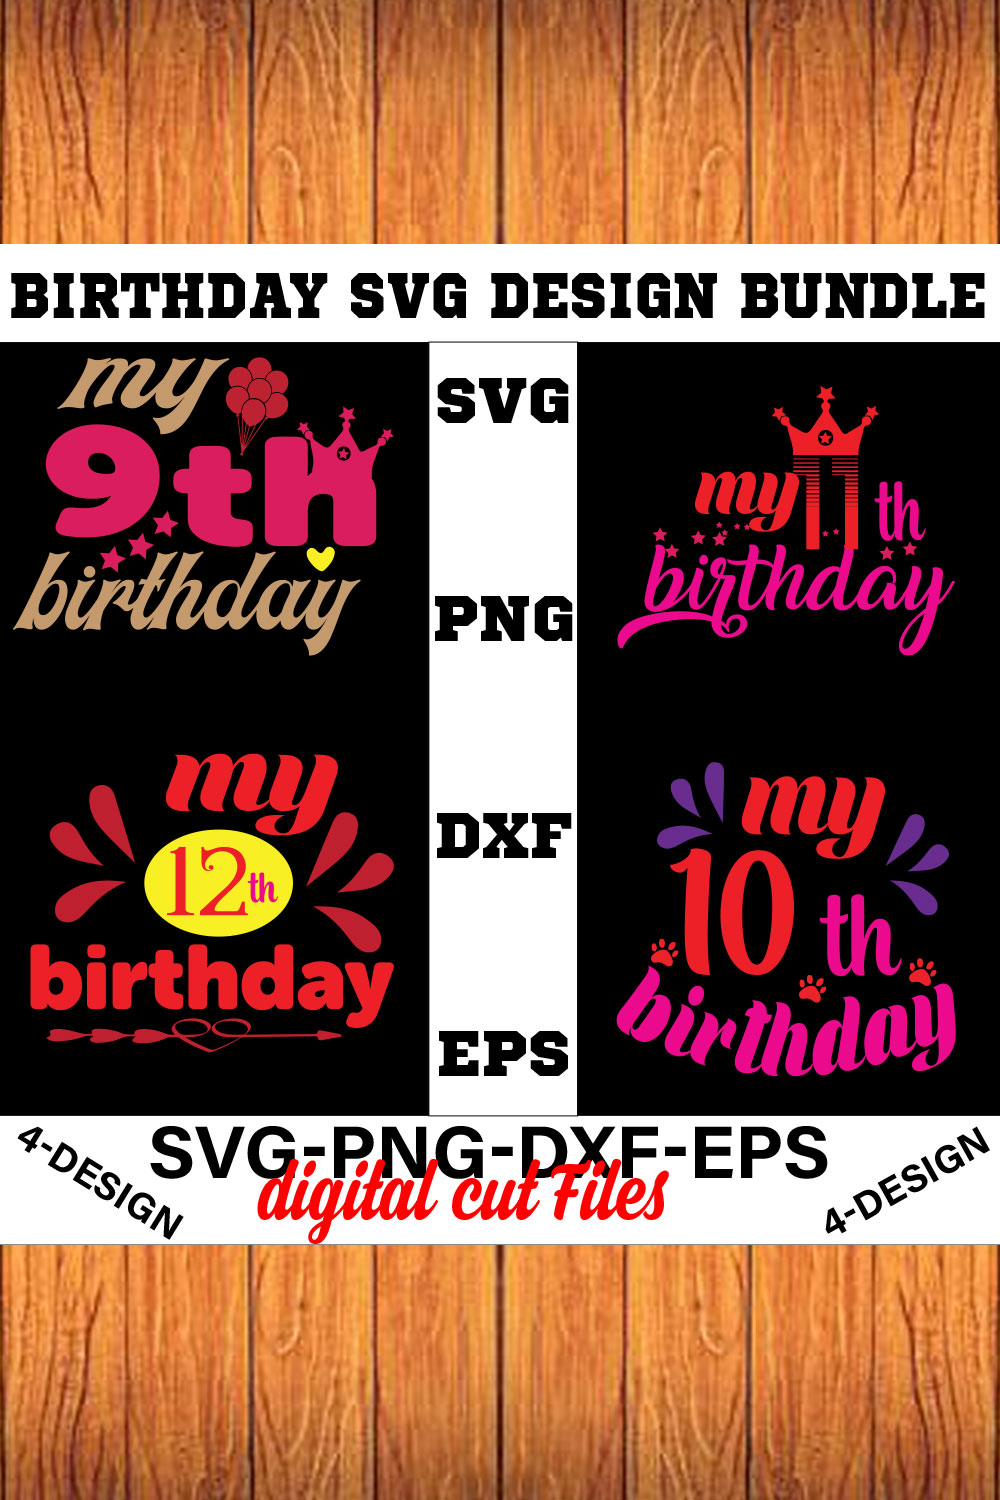 birthday svg design bundle Happy birthday svg bundle hand lettered birthday svg birthday party svg Volume-19 pinterest preview image.